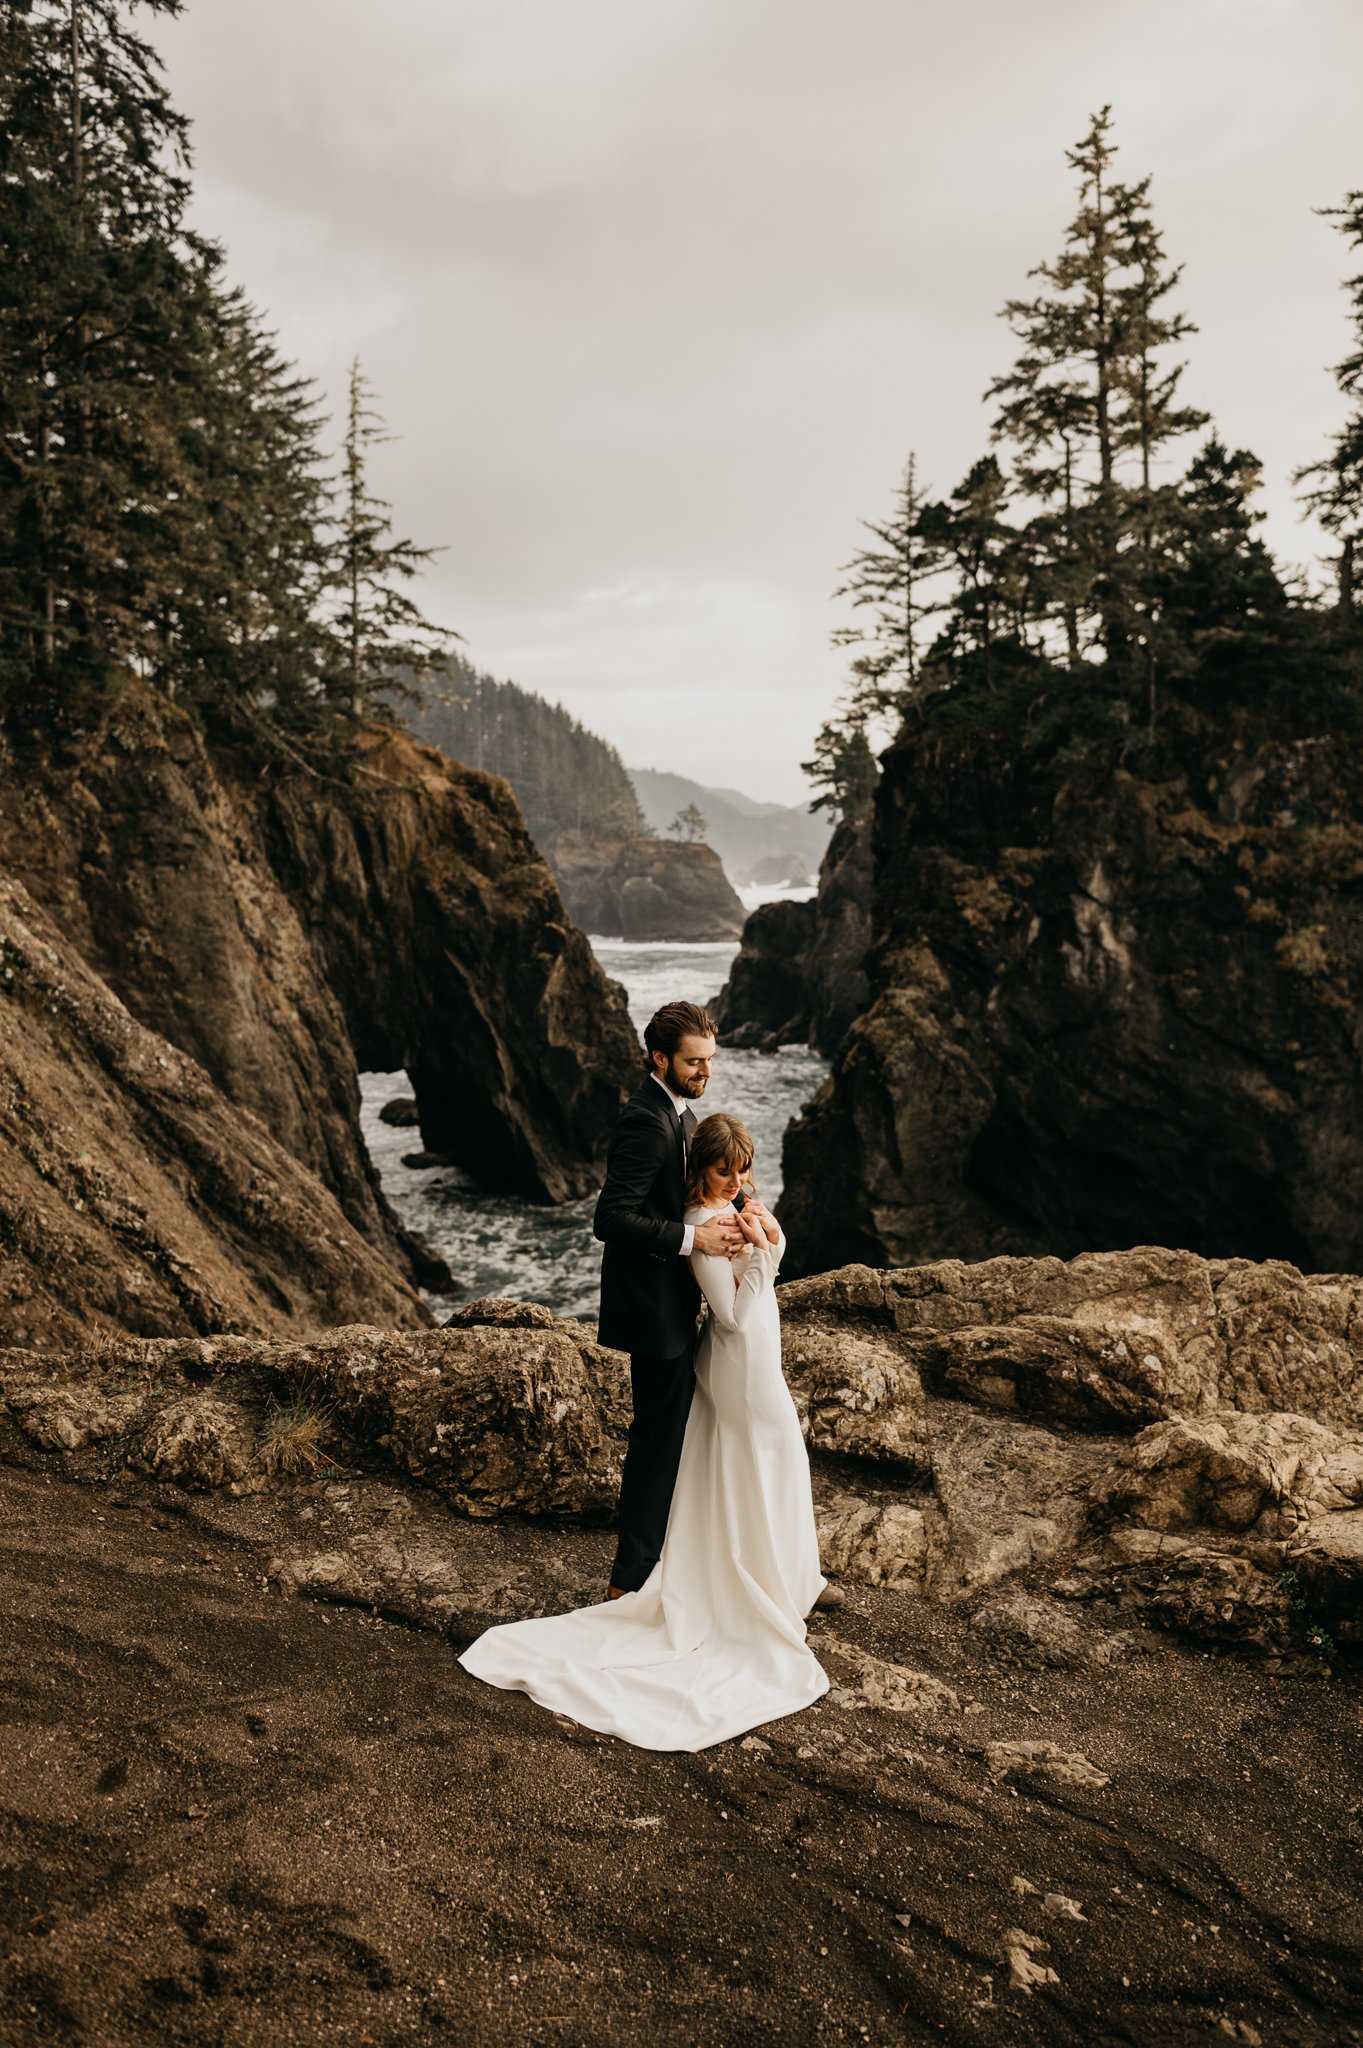 Bride and groom in wedding attire above the ocean after wedding ceremony in Oregon.